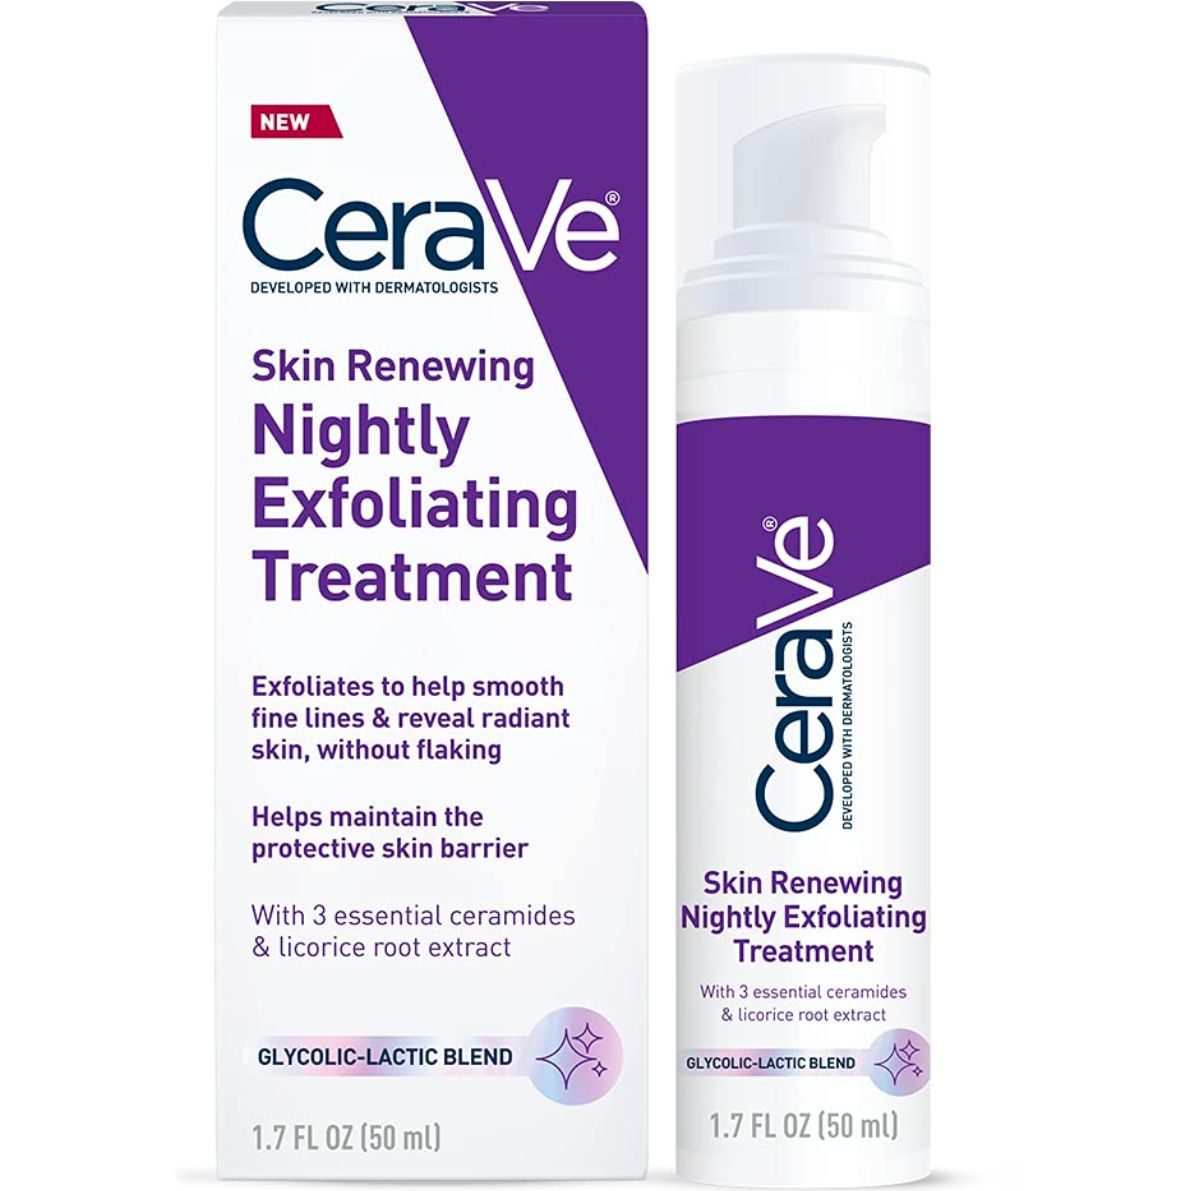 Cerave nightly exfoliating treatment